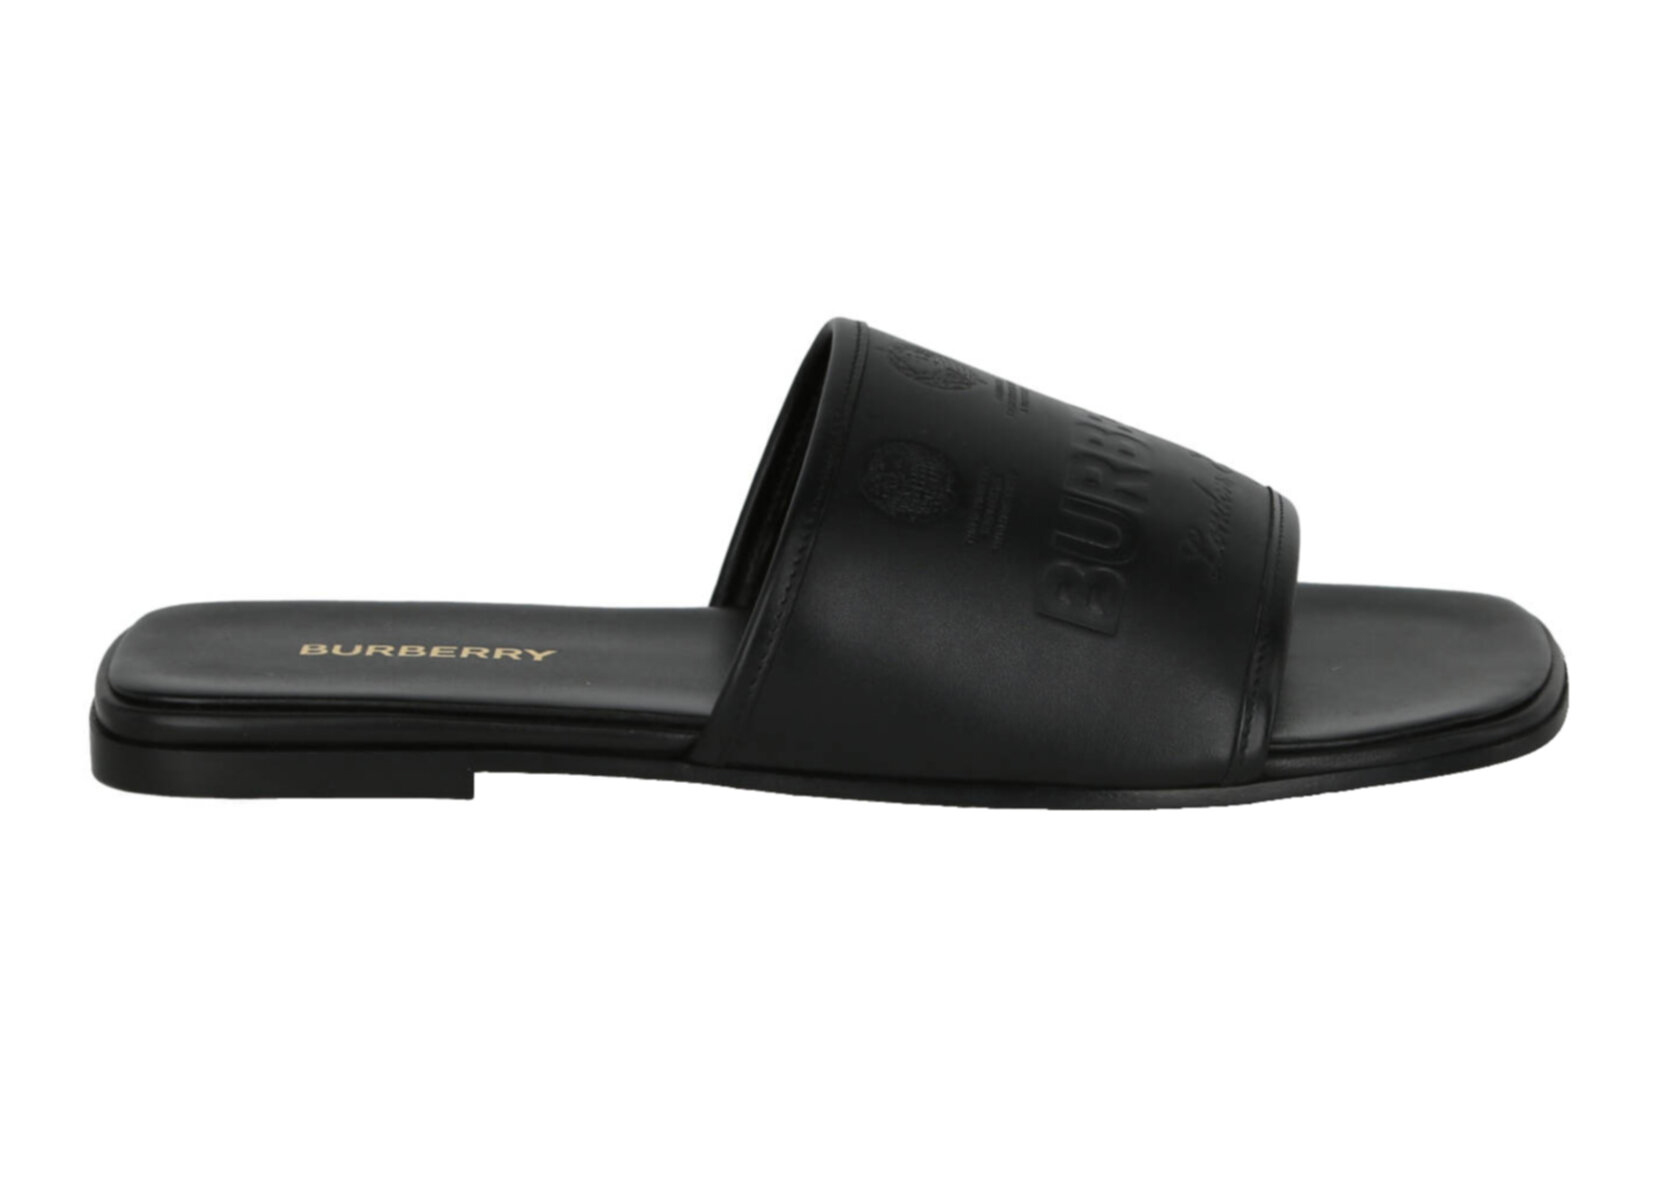 Burberry Logo Leather Sandal Black (Women's) - 8063172 00002